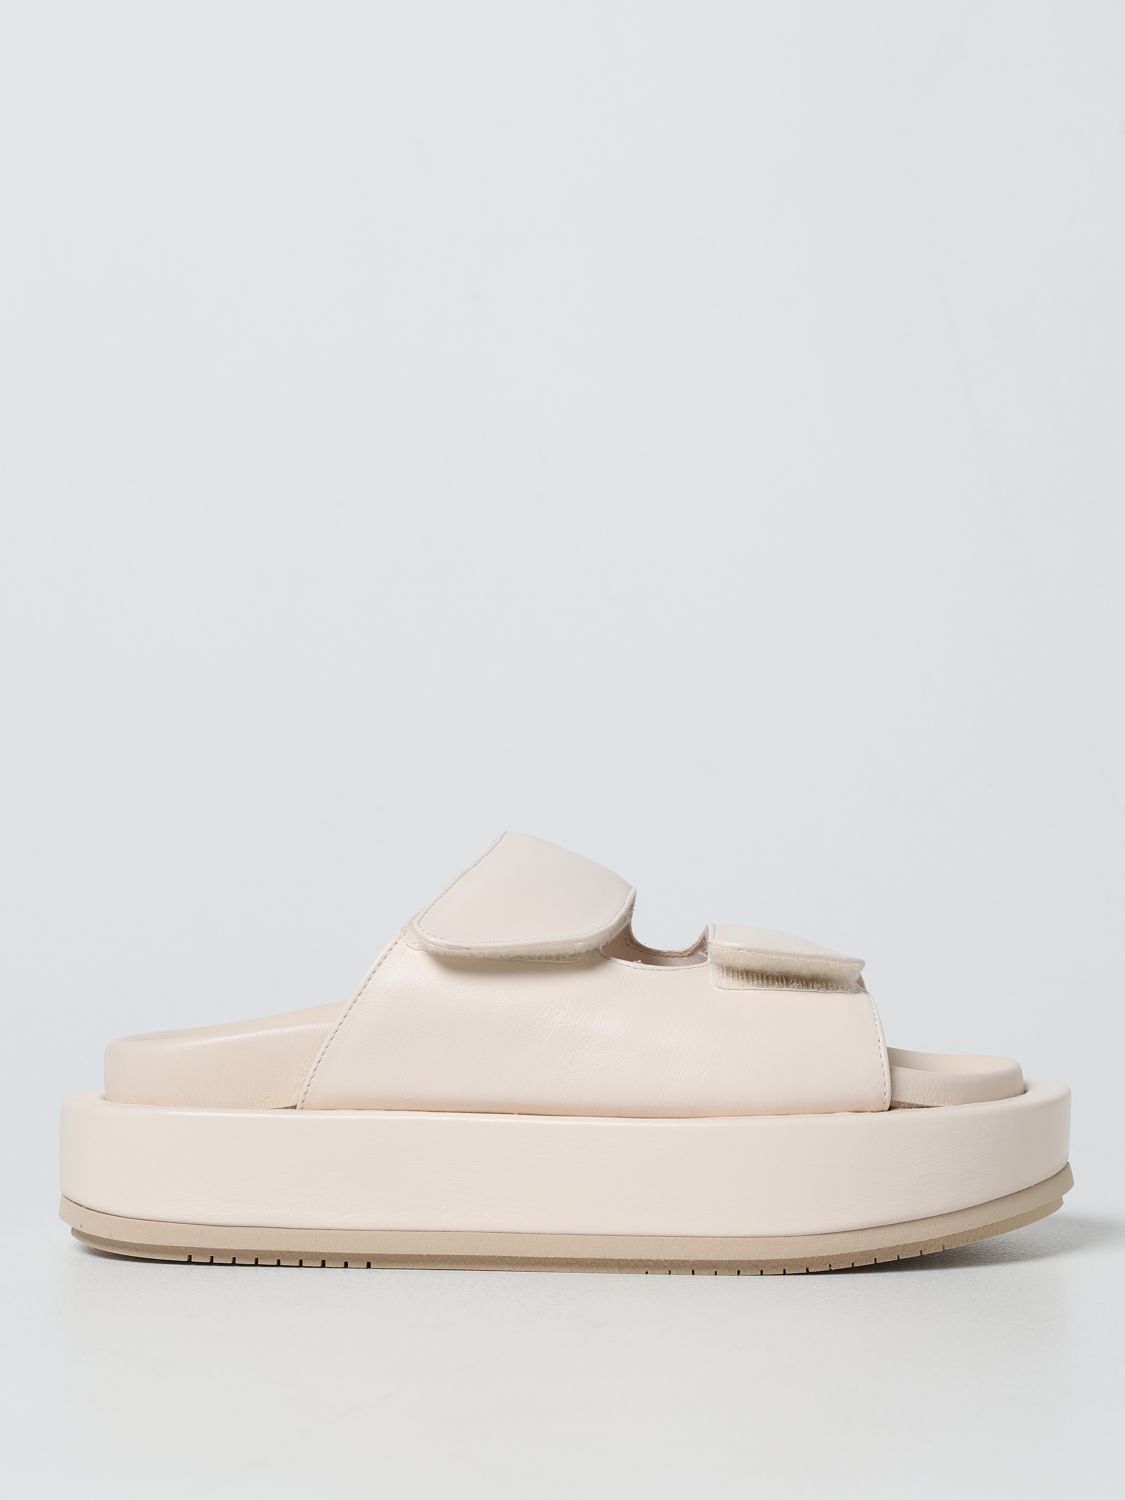 Elza sandals in nappa leather - White | Paloma Barcelò flat ELZANA PASILK online at GIGLIO.COM